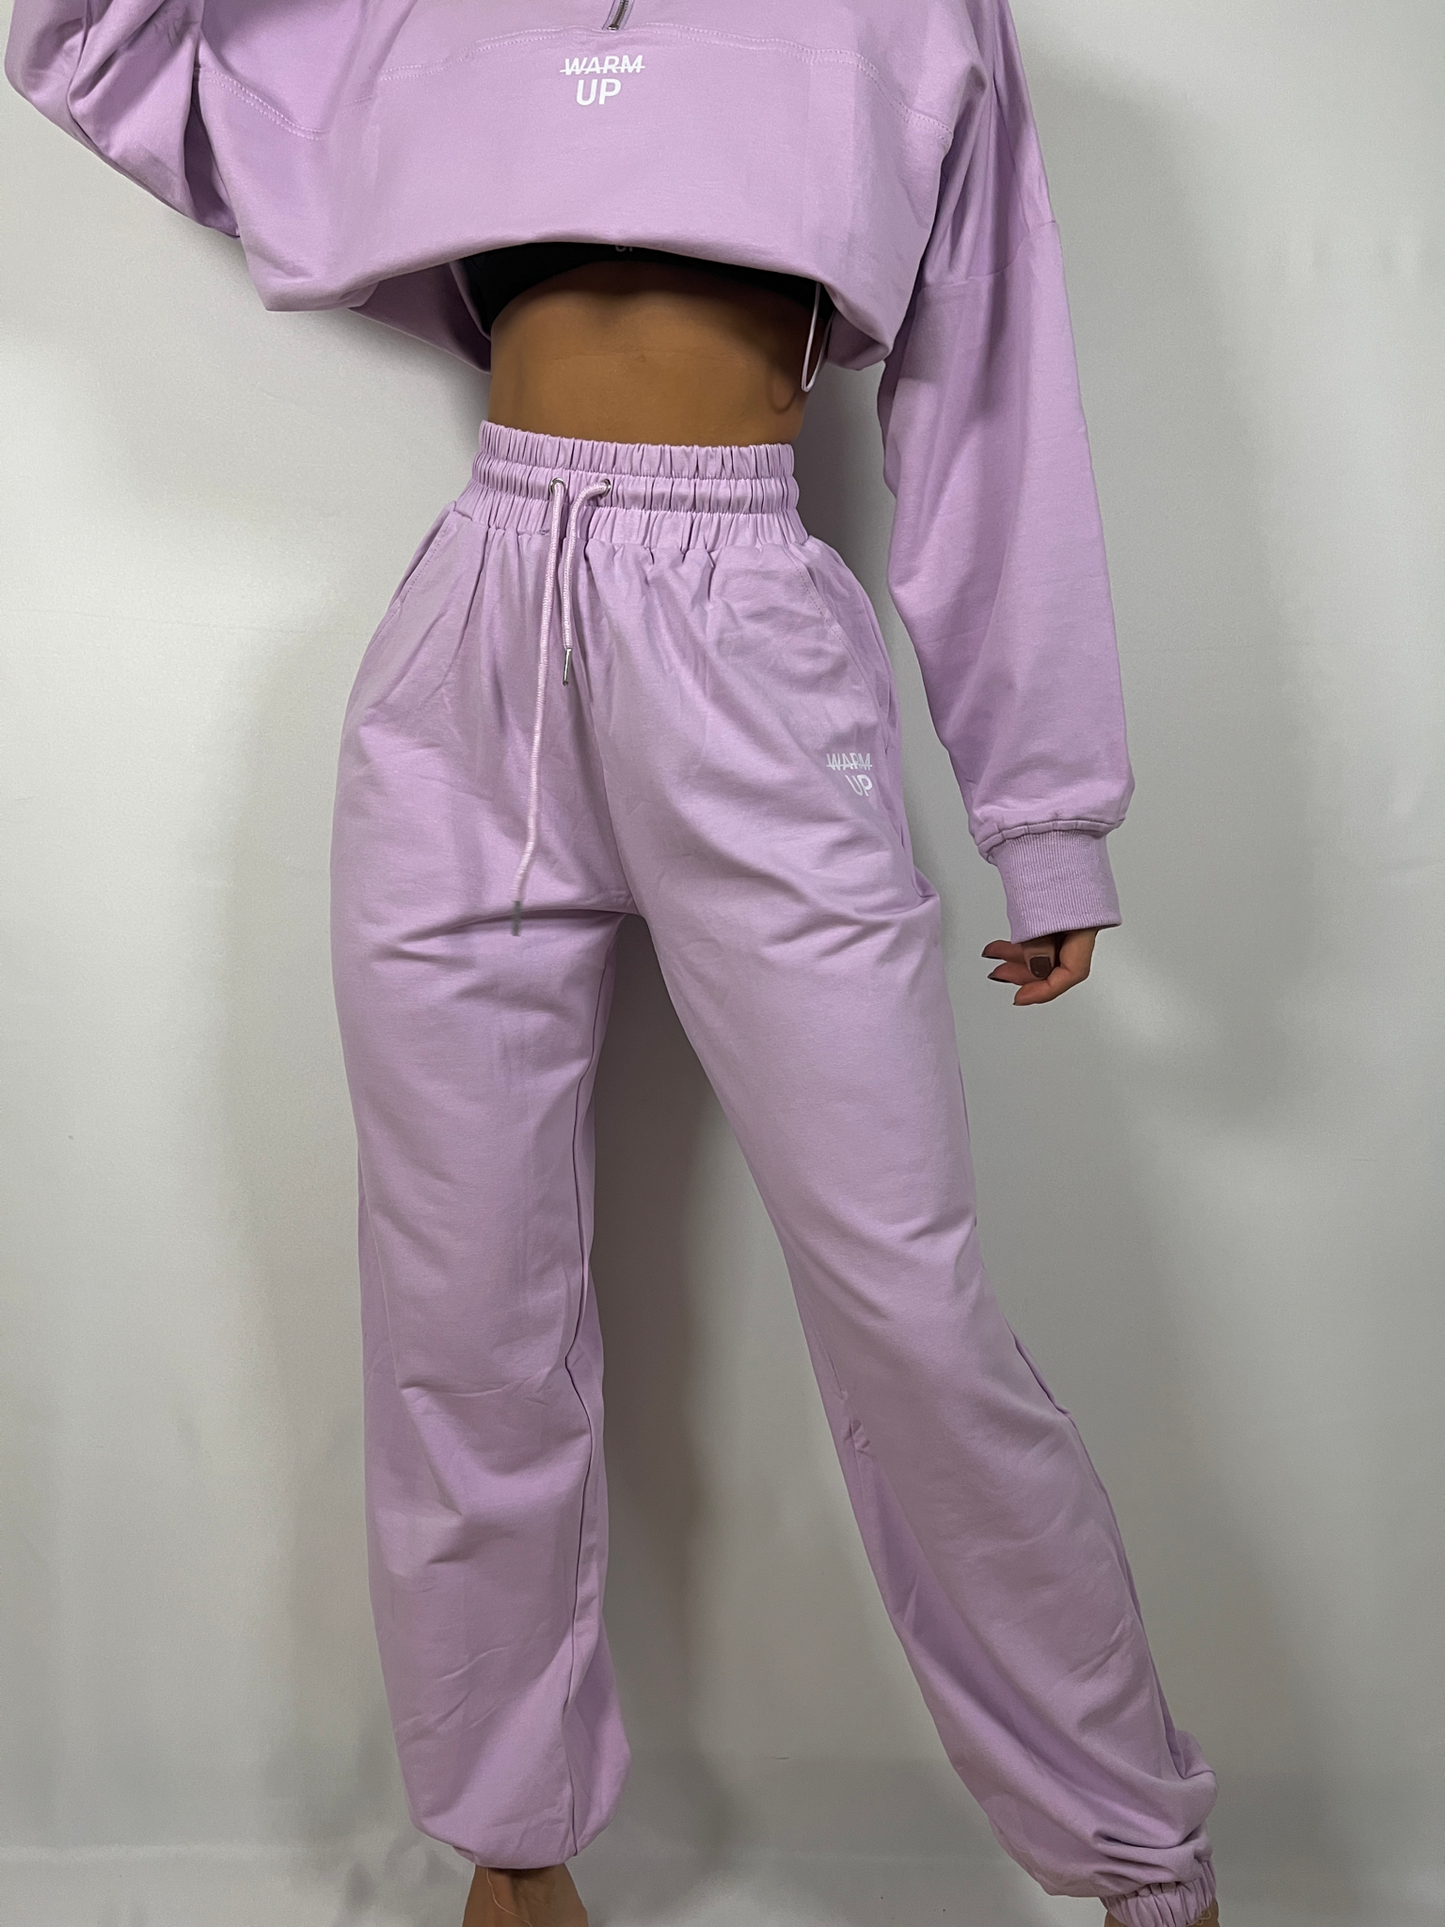 Lavender drawstring lightweight sweatpants